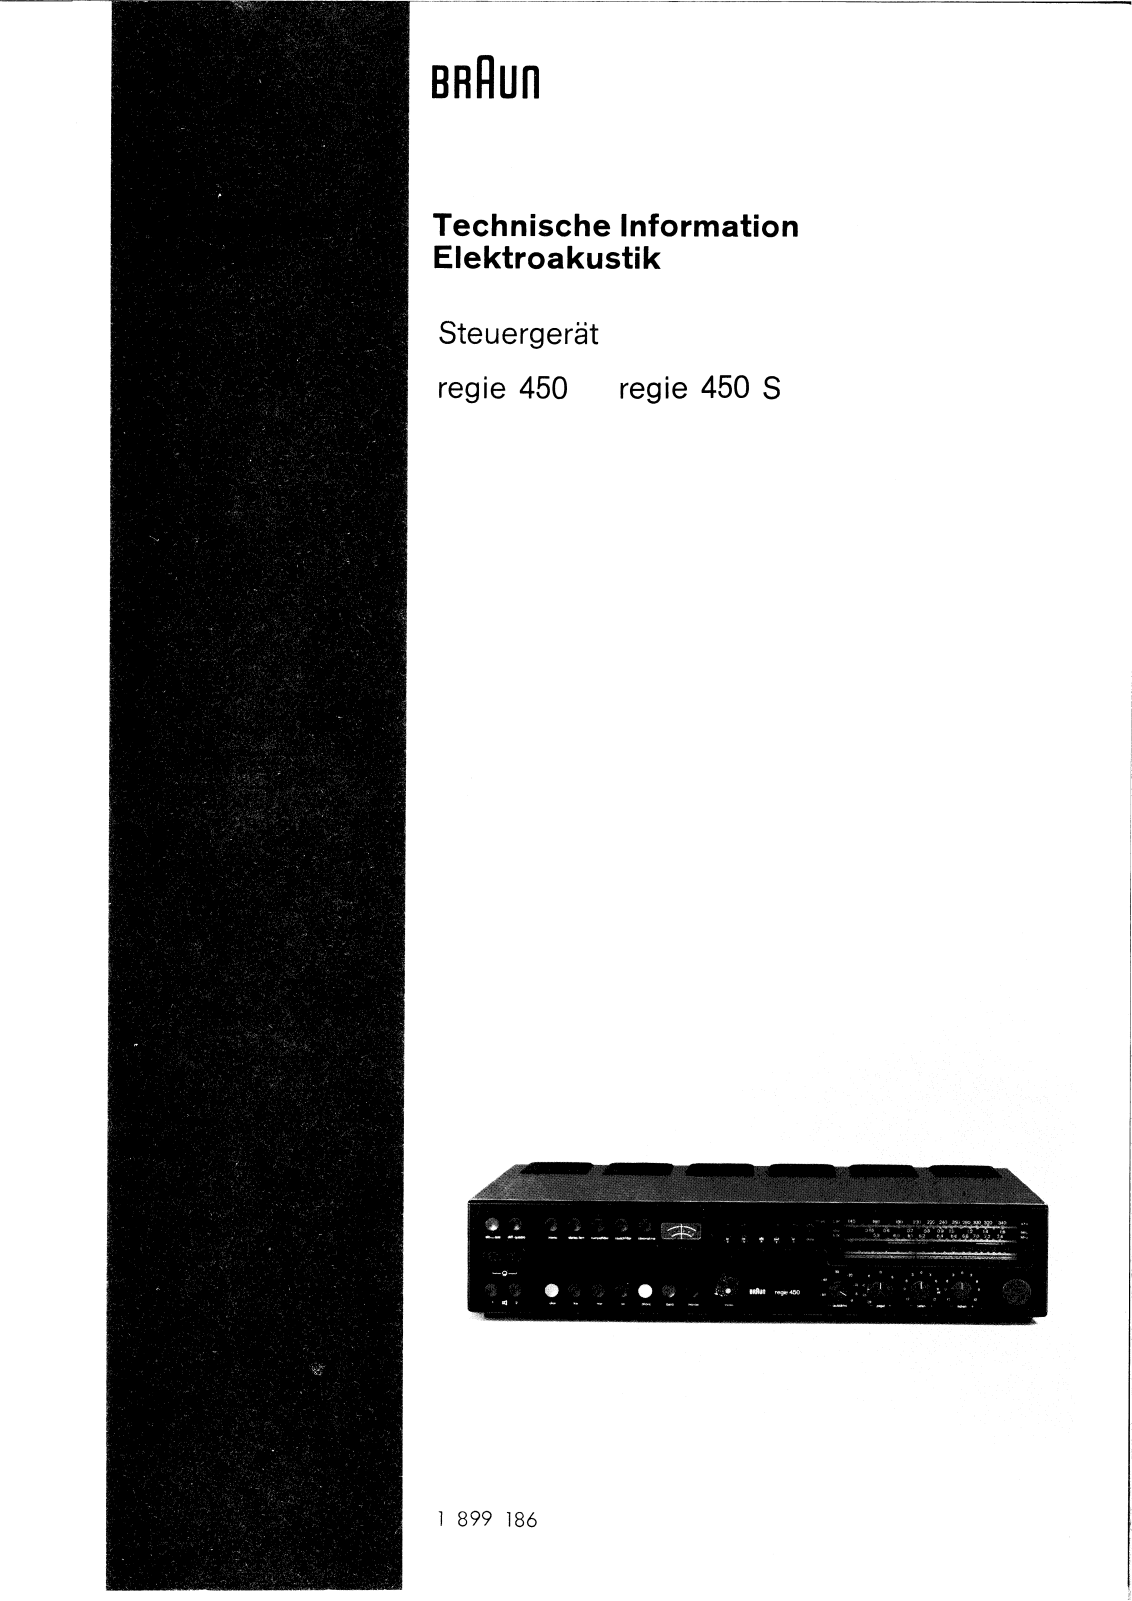 Braun Regie-450-S, Regie-450 Service Manual